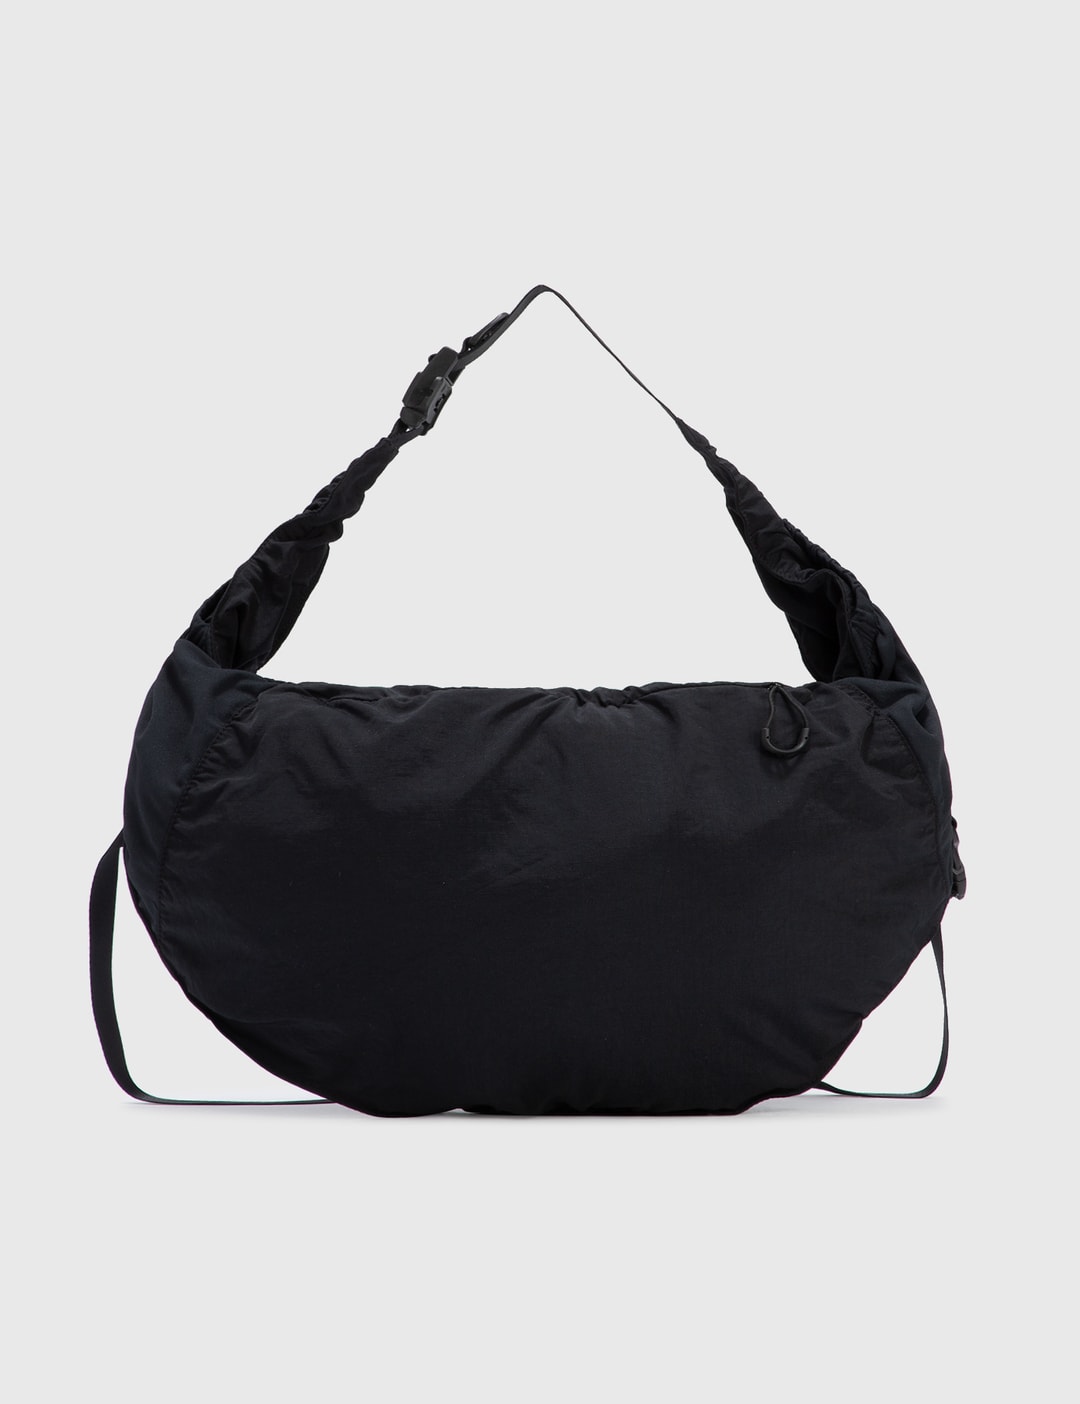 Comfy Outdoor Garment - Tasuki Bag | HBX - Globally Curated Fashion and ...